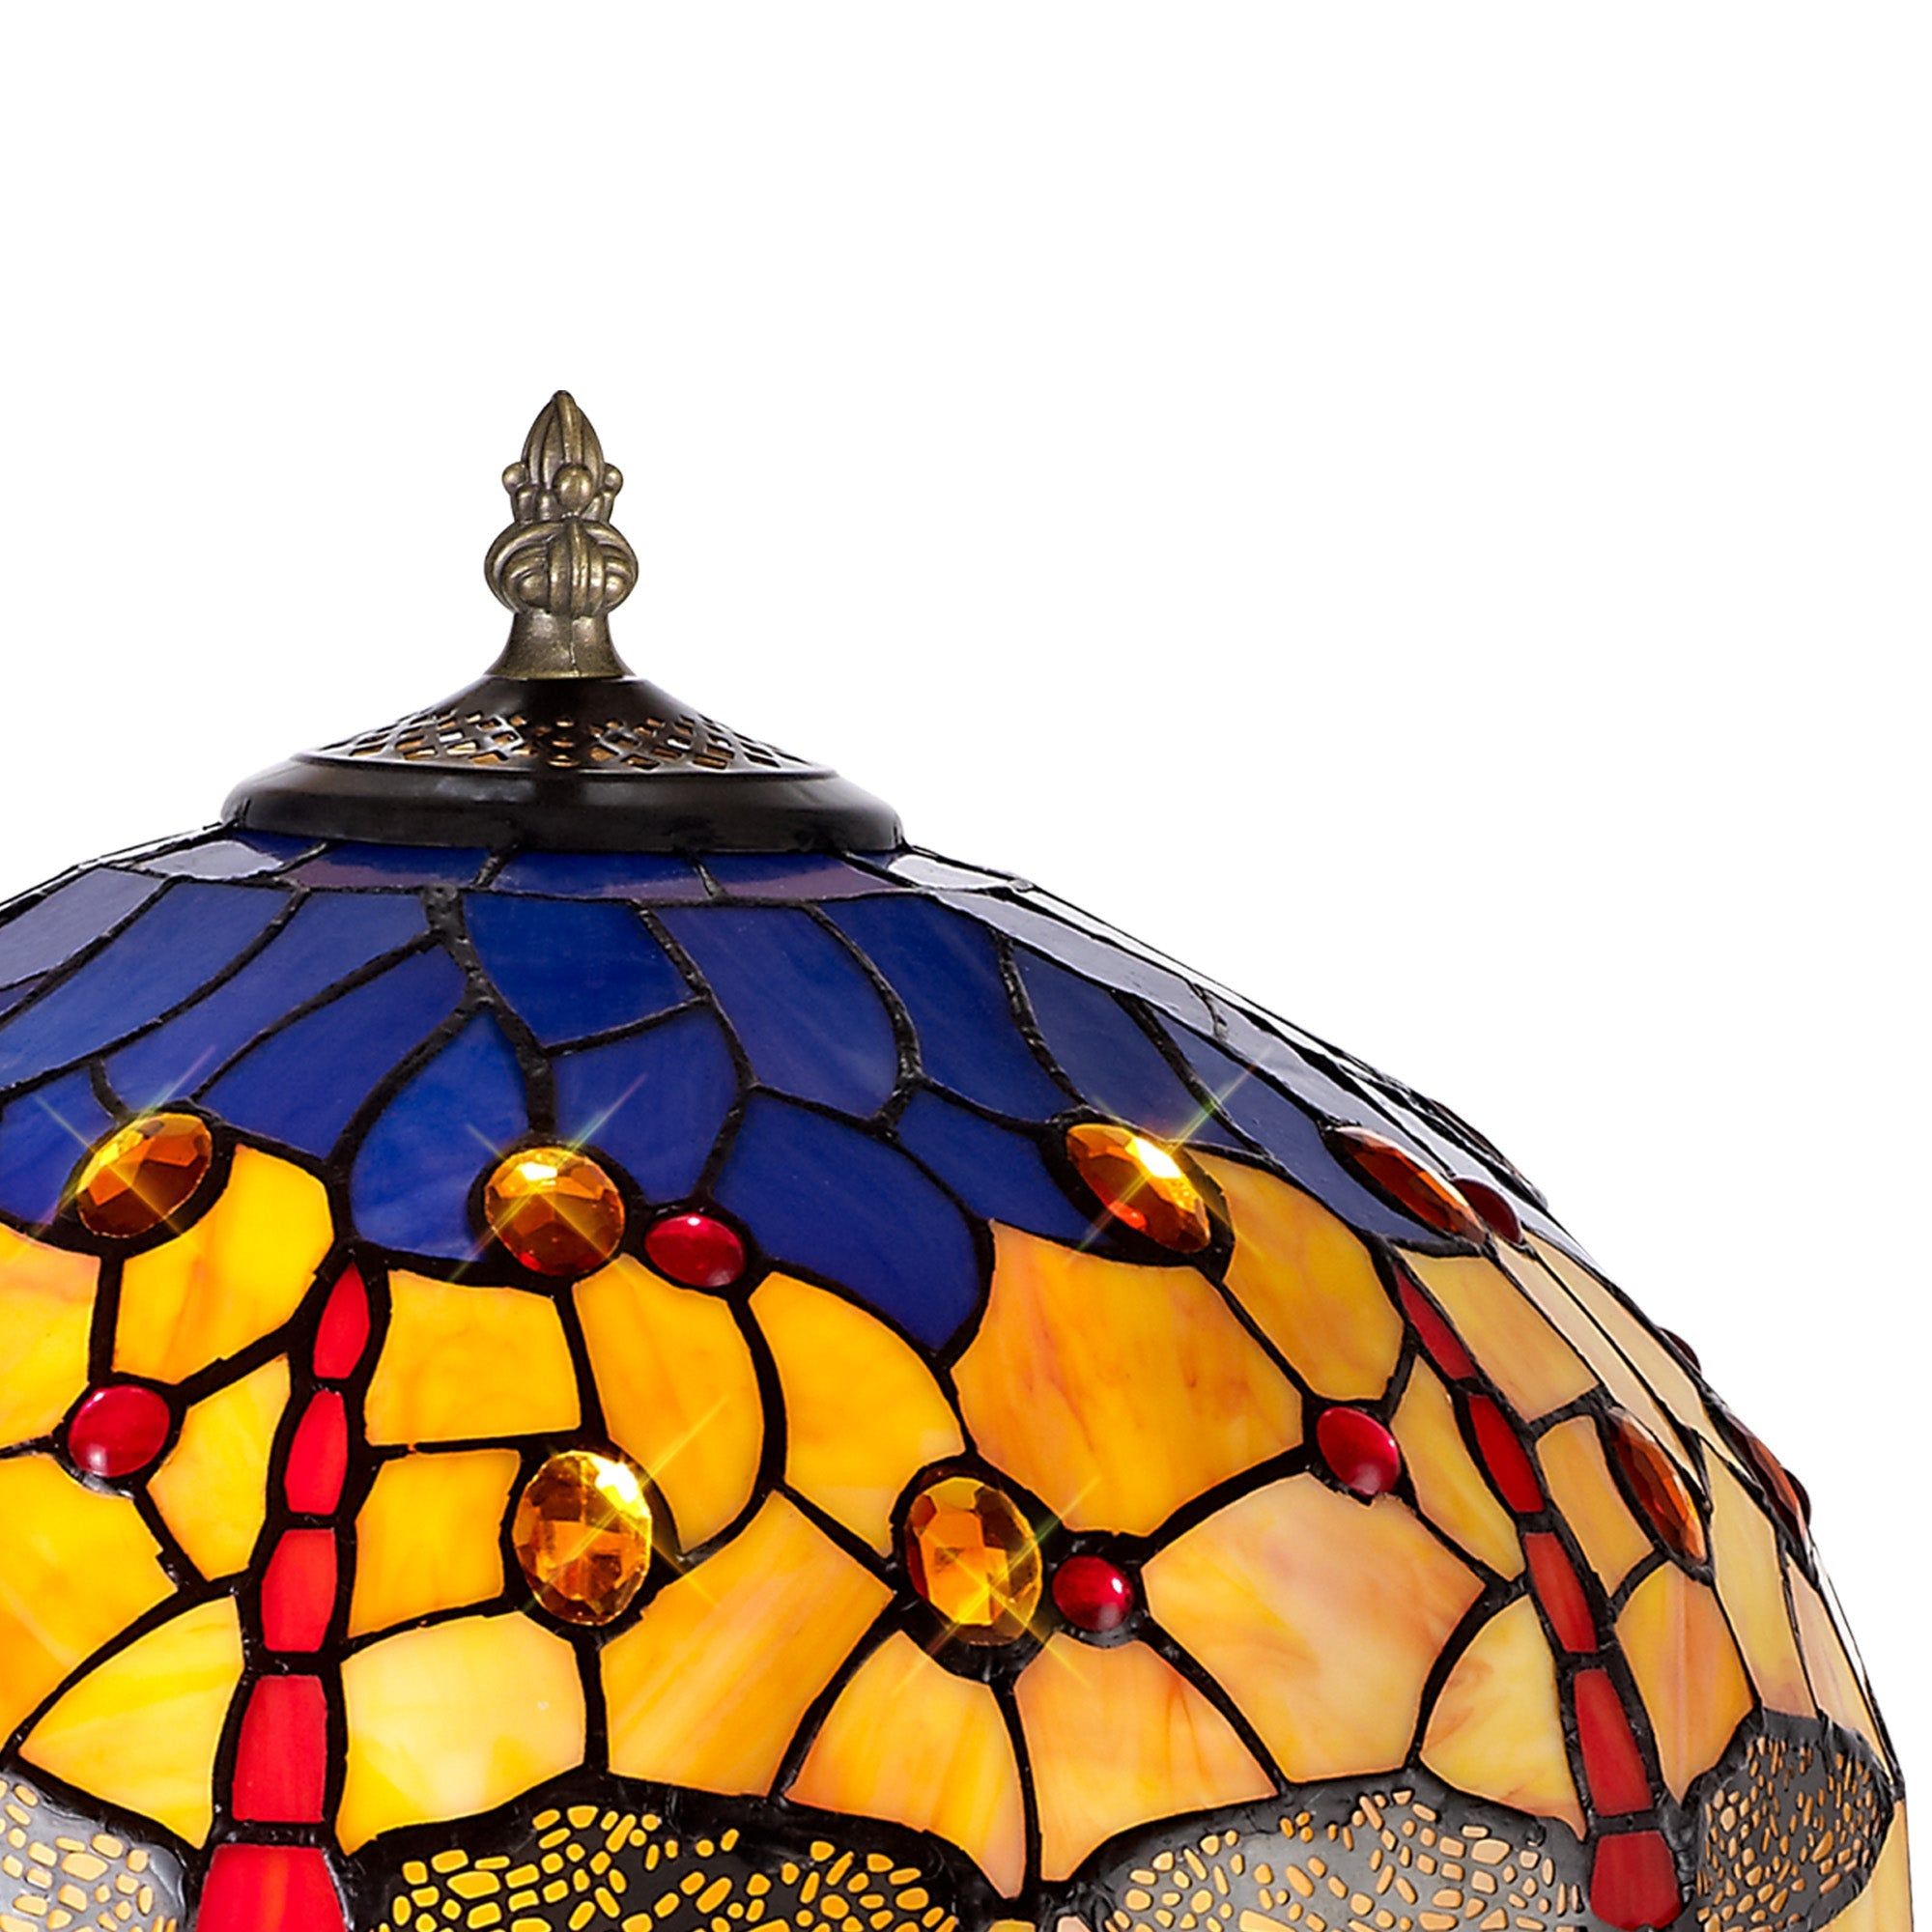 Nuflur 2 Light Octagonal Table Lamp E27 With 40cm Tiffany Shade, Blue/Orange/Crystal/Aged Antique Brass